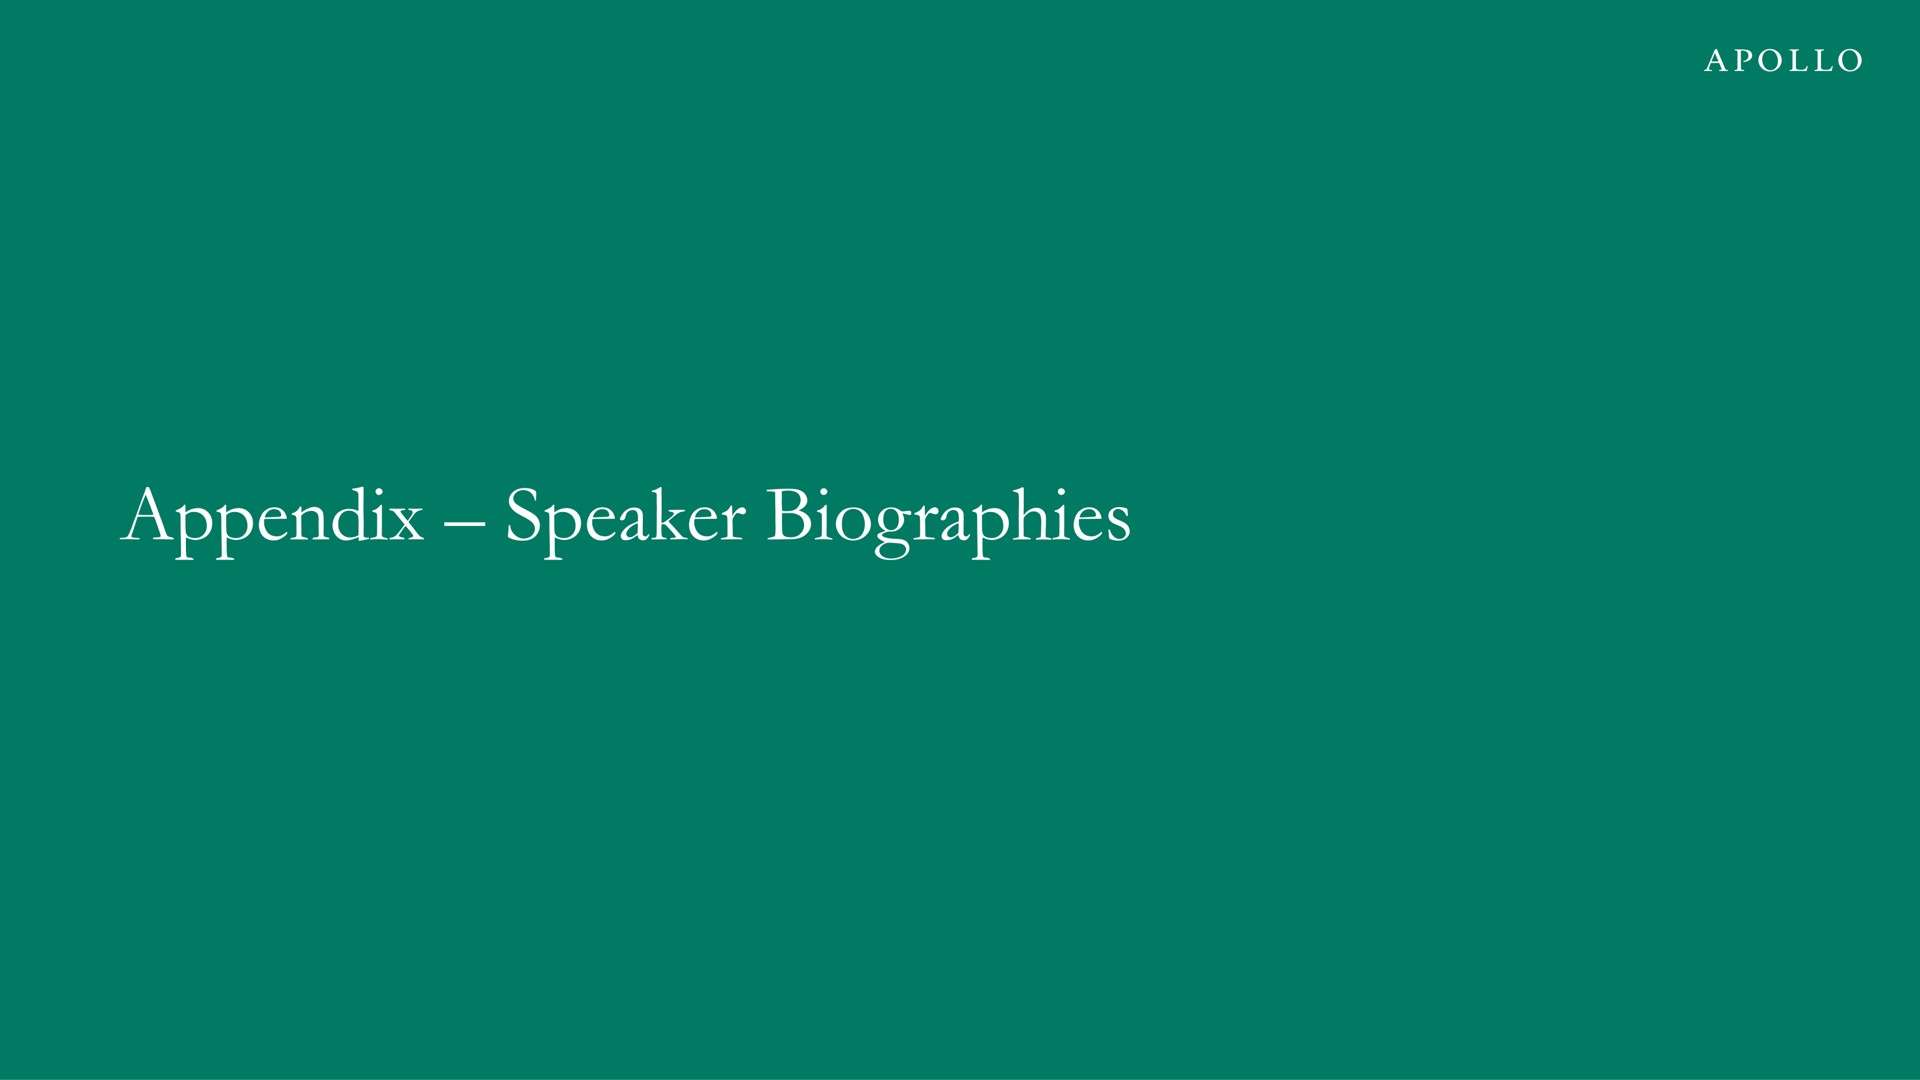 appendix speaker biographies | Apollo Global Management